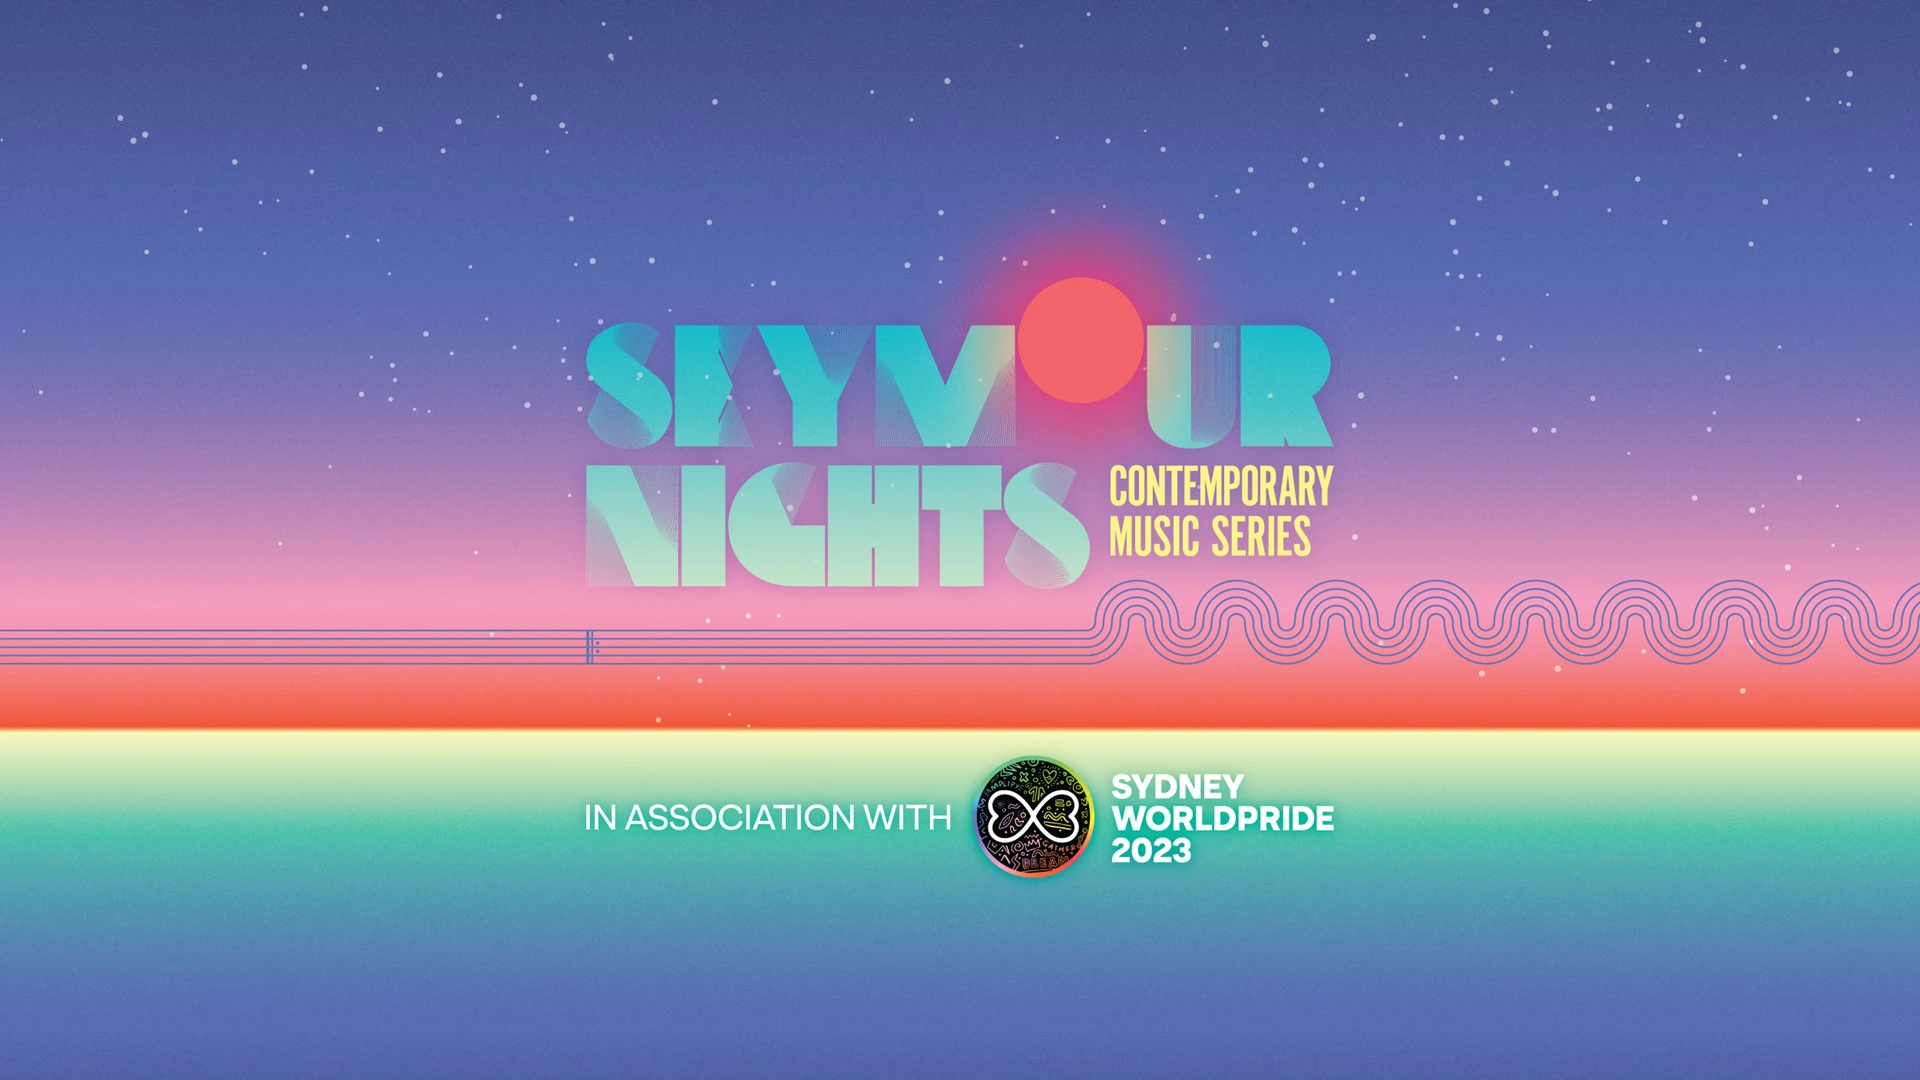 Seymour Nights @ Sydney WorldPride